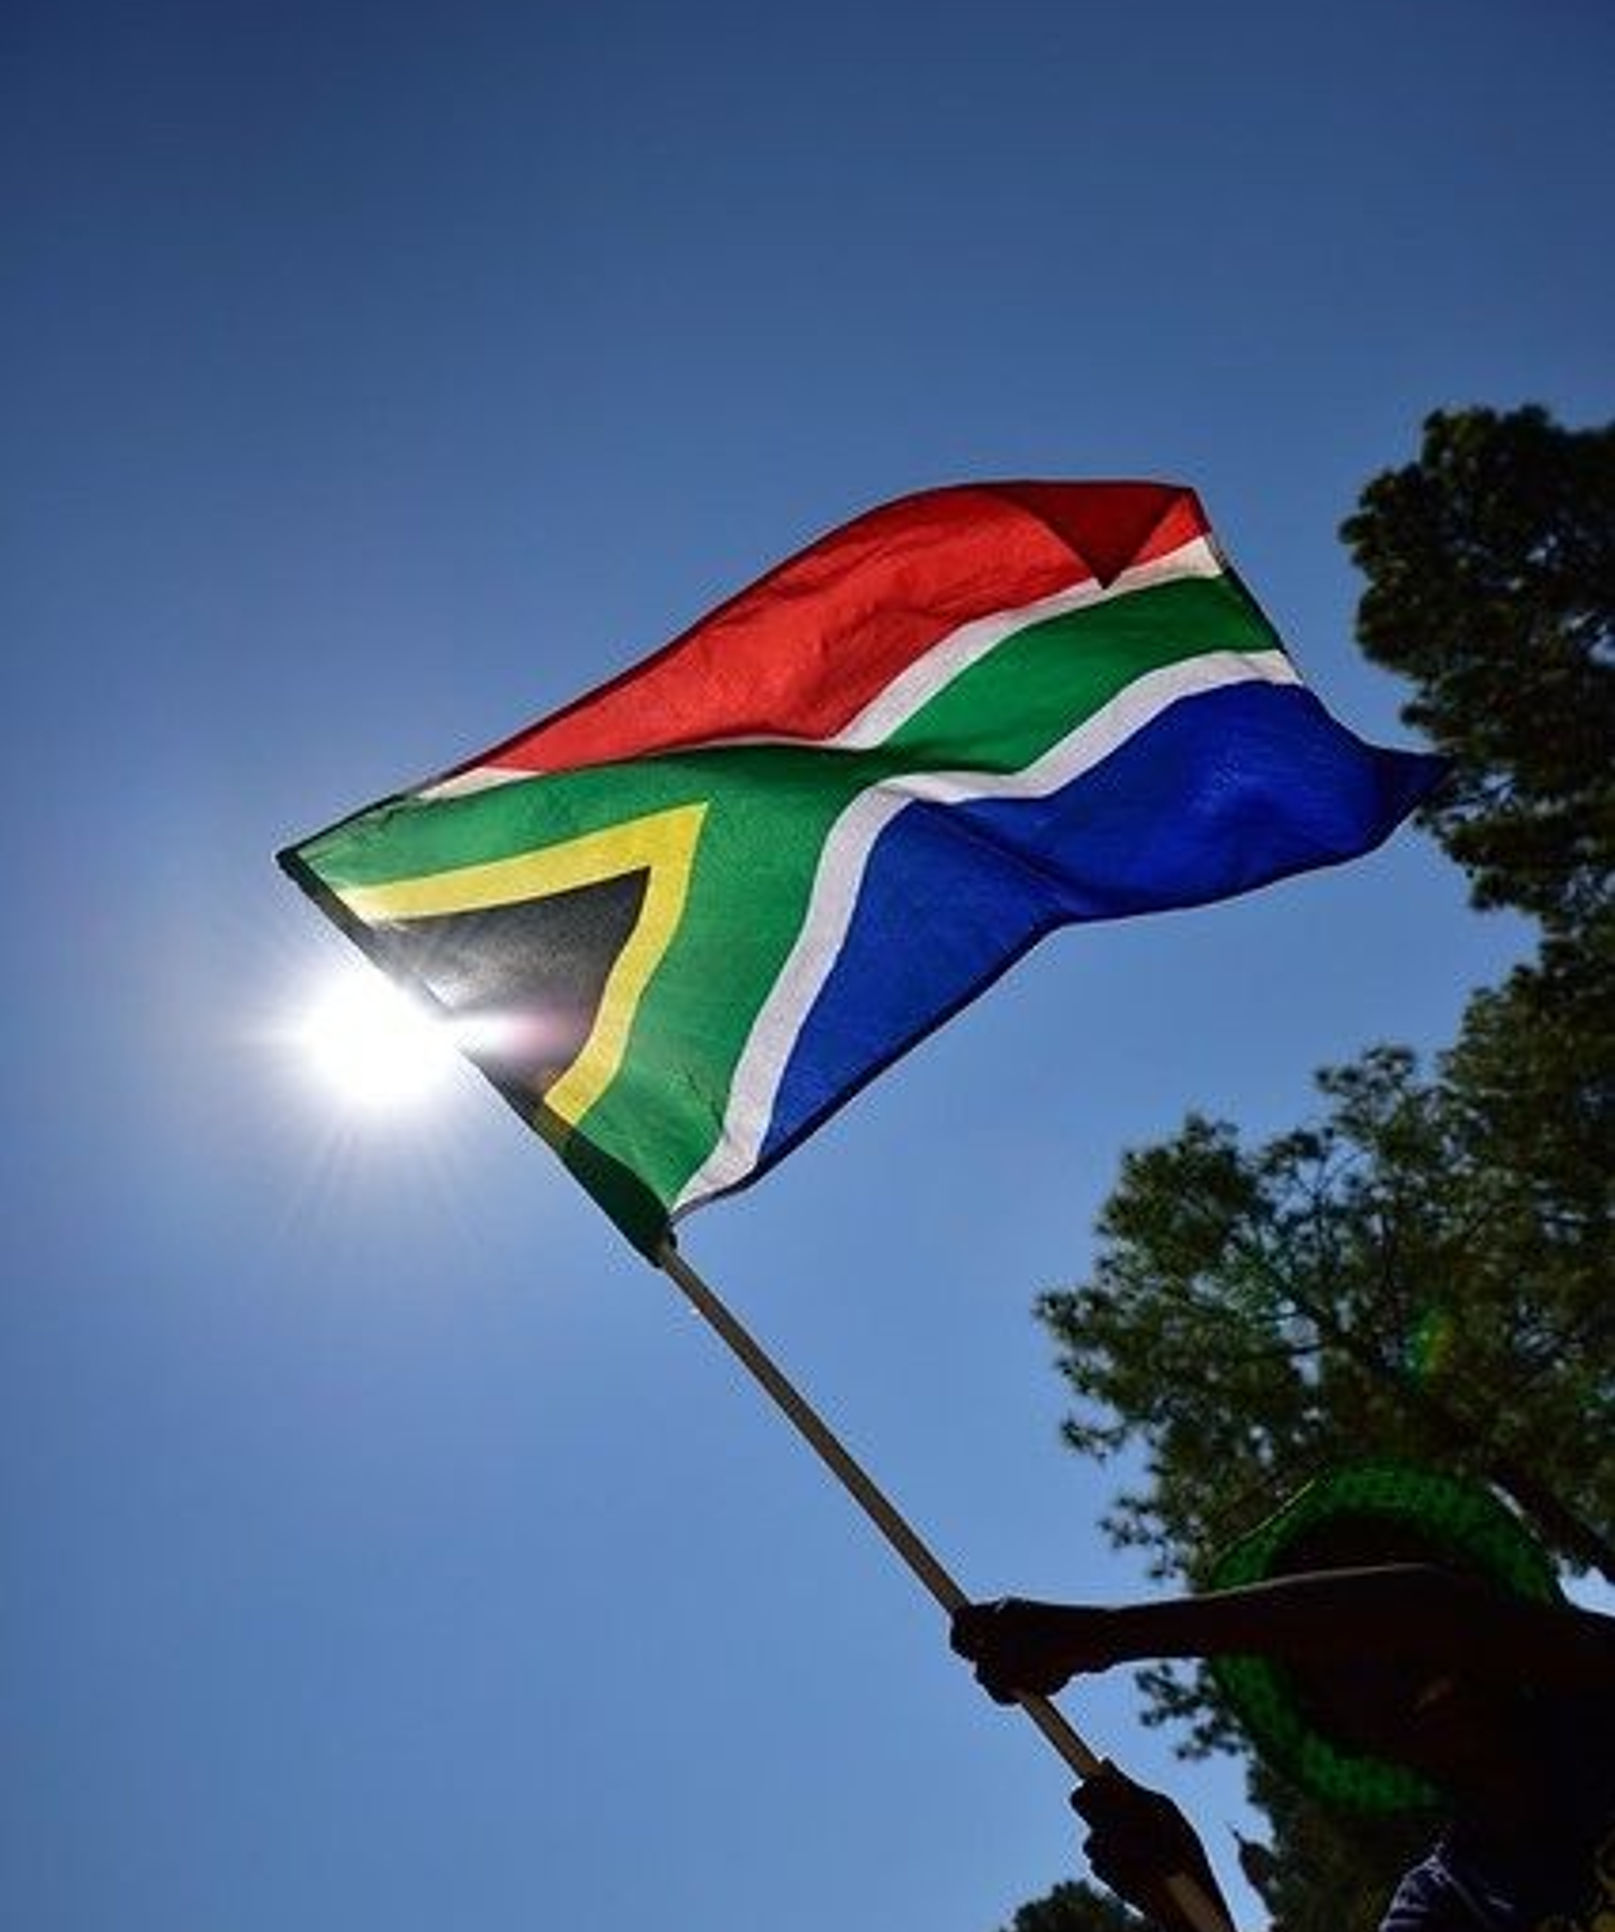 Watch international companies covet South African staff video